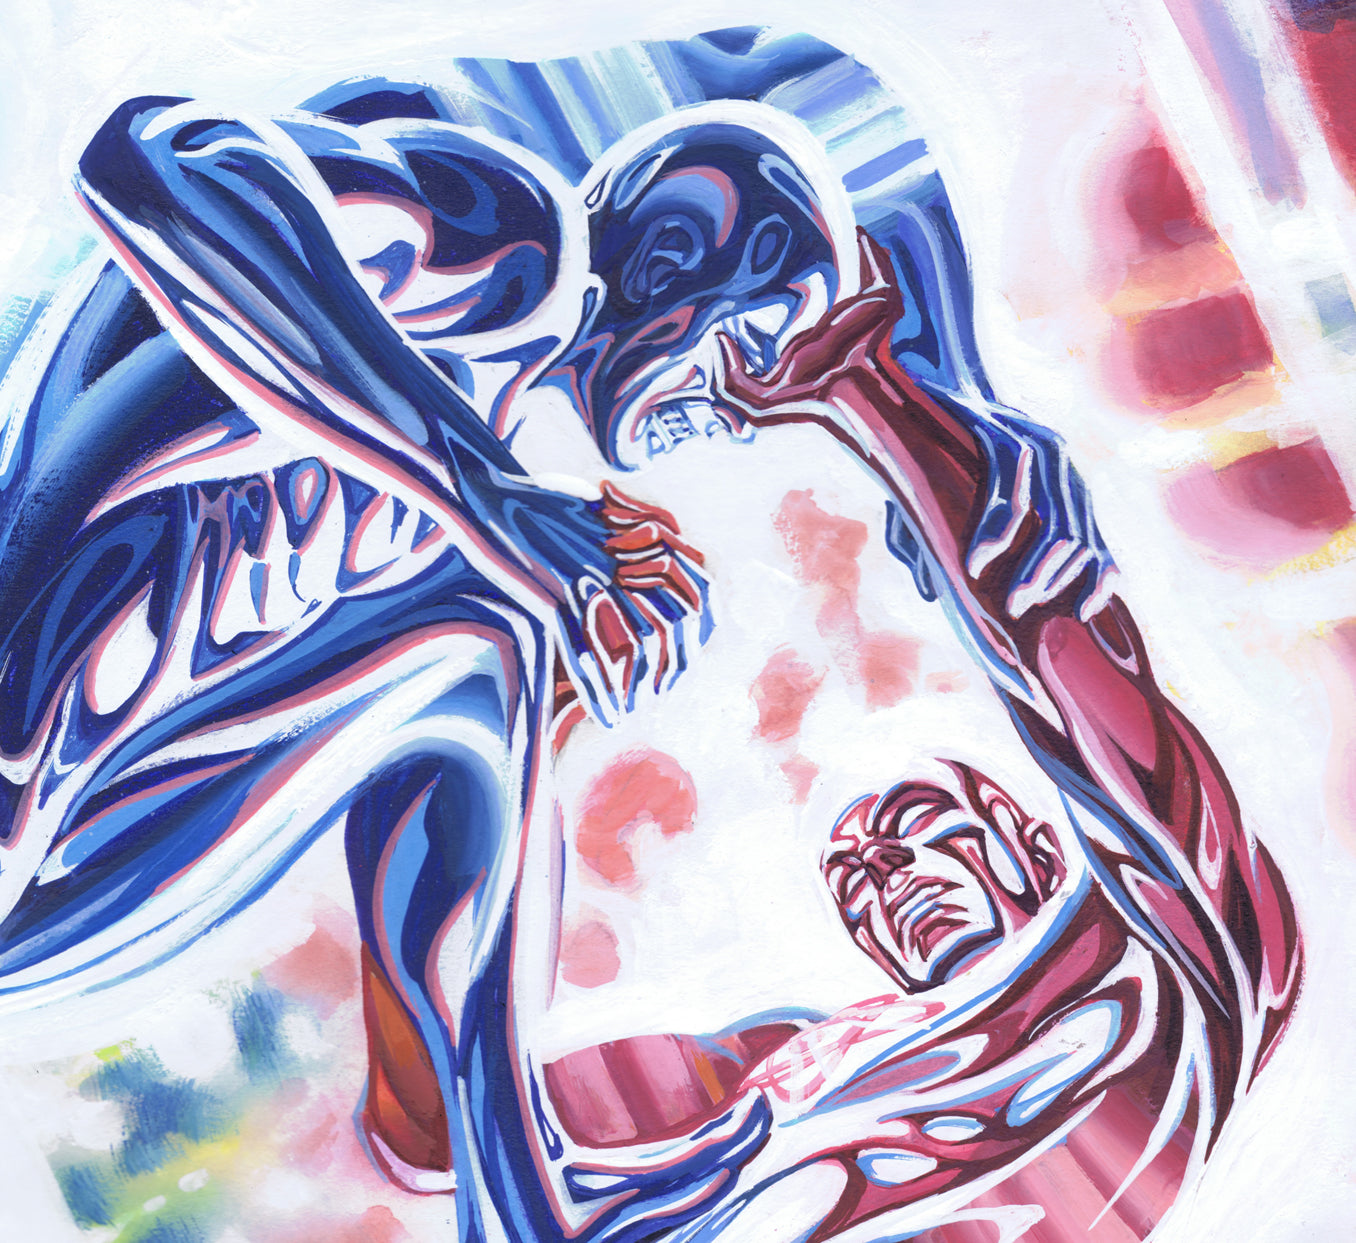 Captain Atom Cover #5 Original Painting